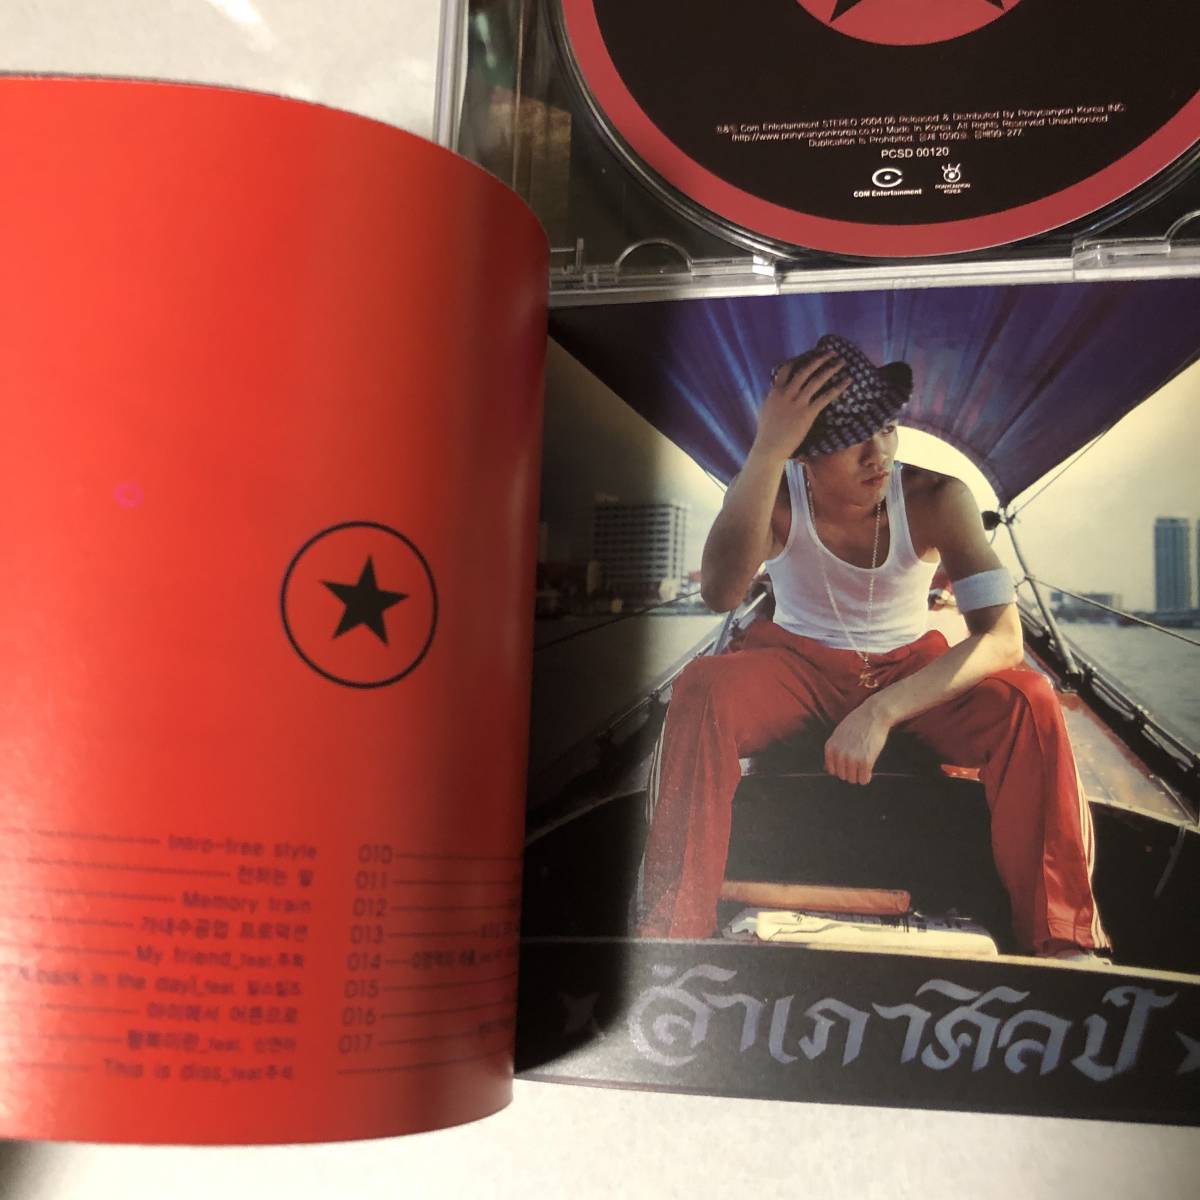 Digiritigili1 сборник CD Honey Family Корея Rap HipHop LAP труба - hip-hop поп-музыка K-POP